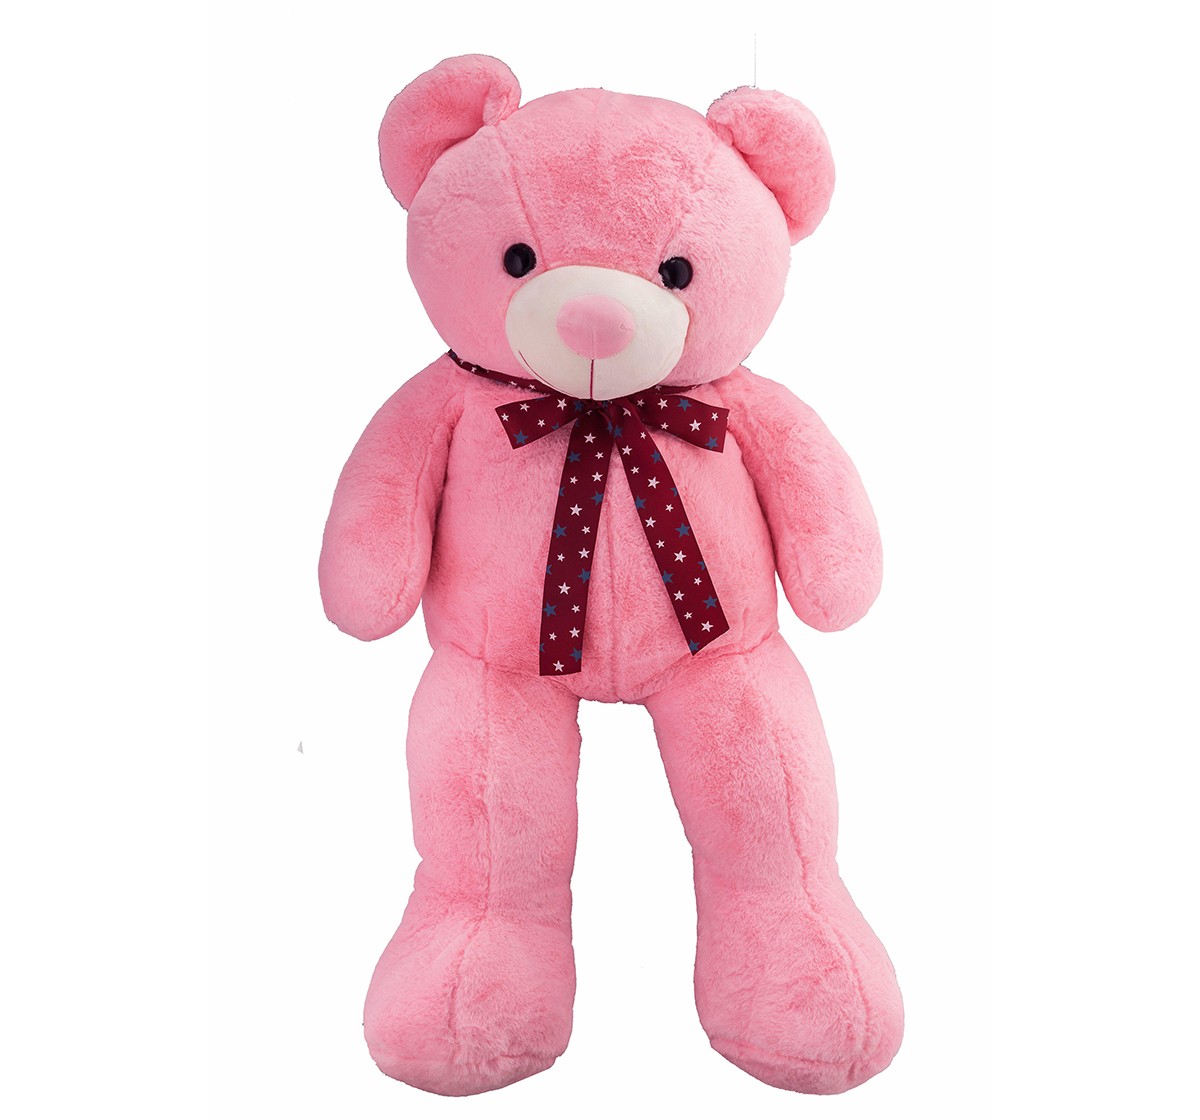 Dimpy Toys Jasco Teddy Bear With Bow  Assorted, 70Cm Teddy Bears for Kids age 3Y+